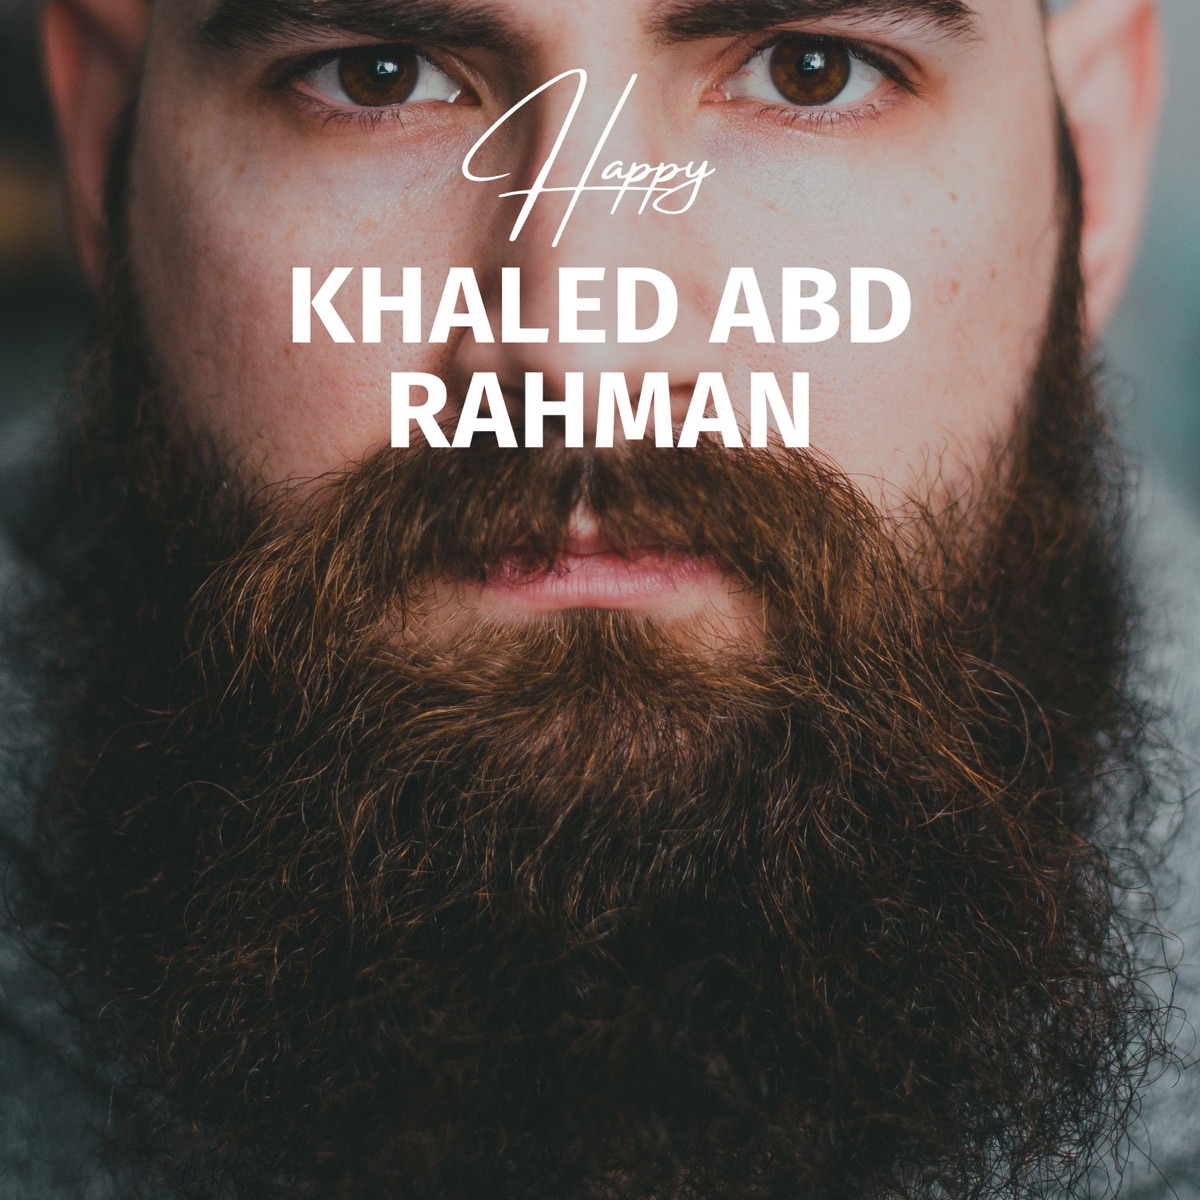 أناشيد إسلامية - Album by Khaled Abd Rahman - Apple Music